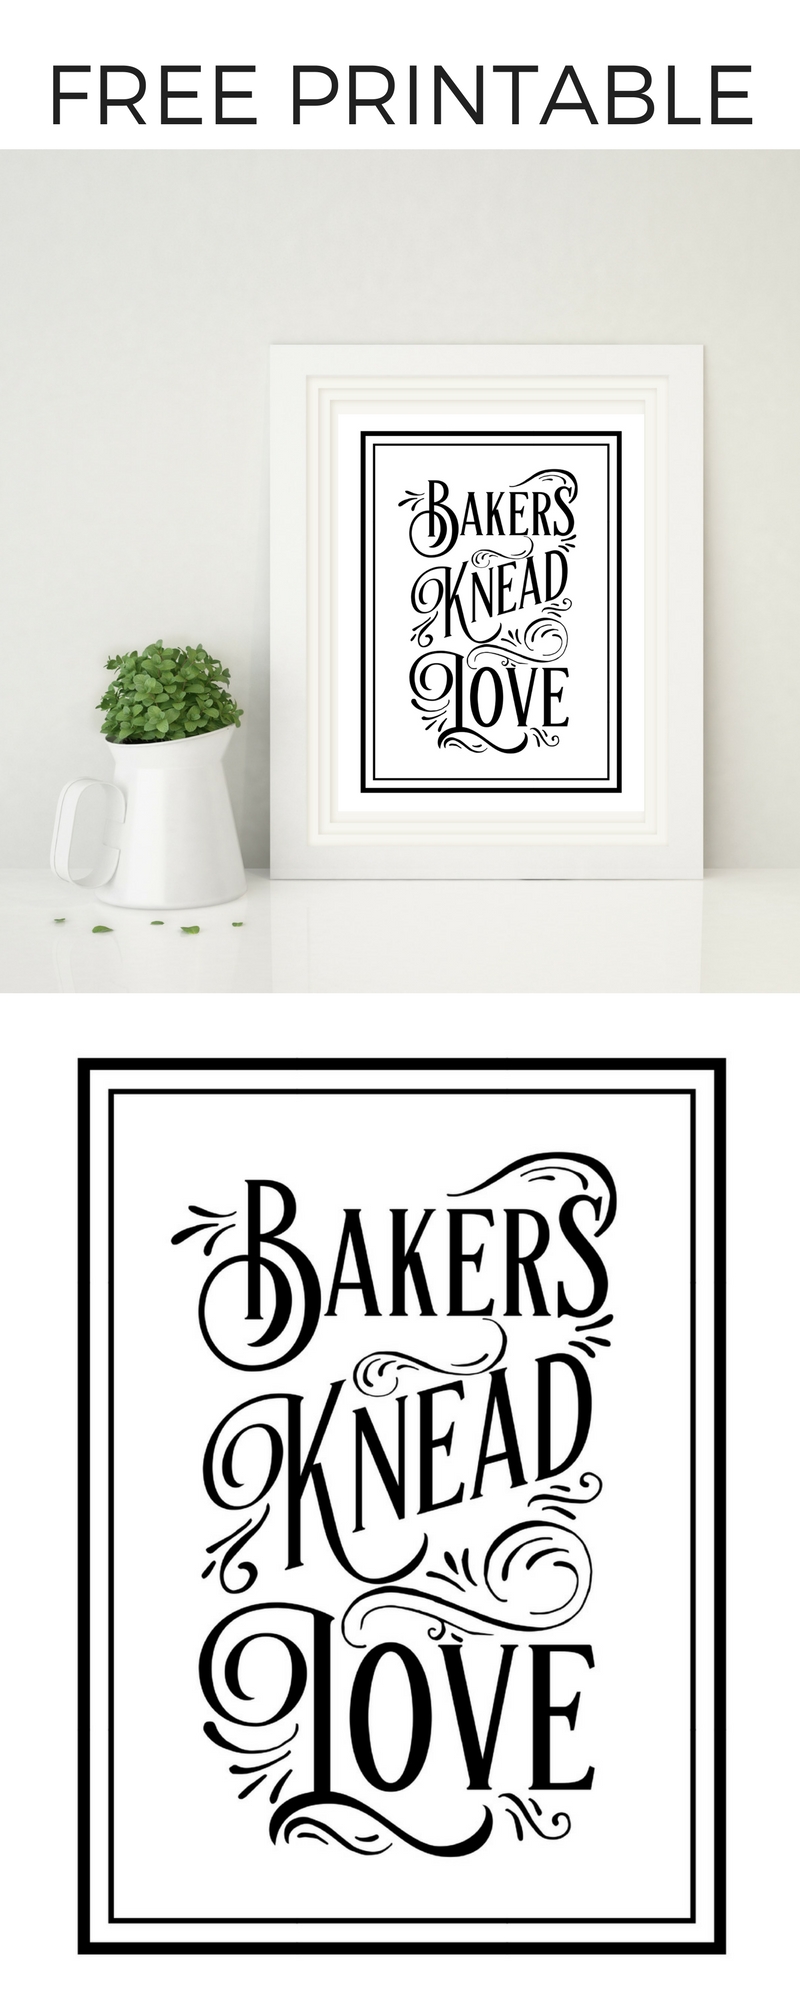 Free Printable - Bakers Knead Love